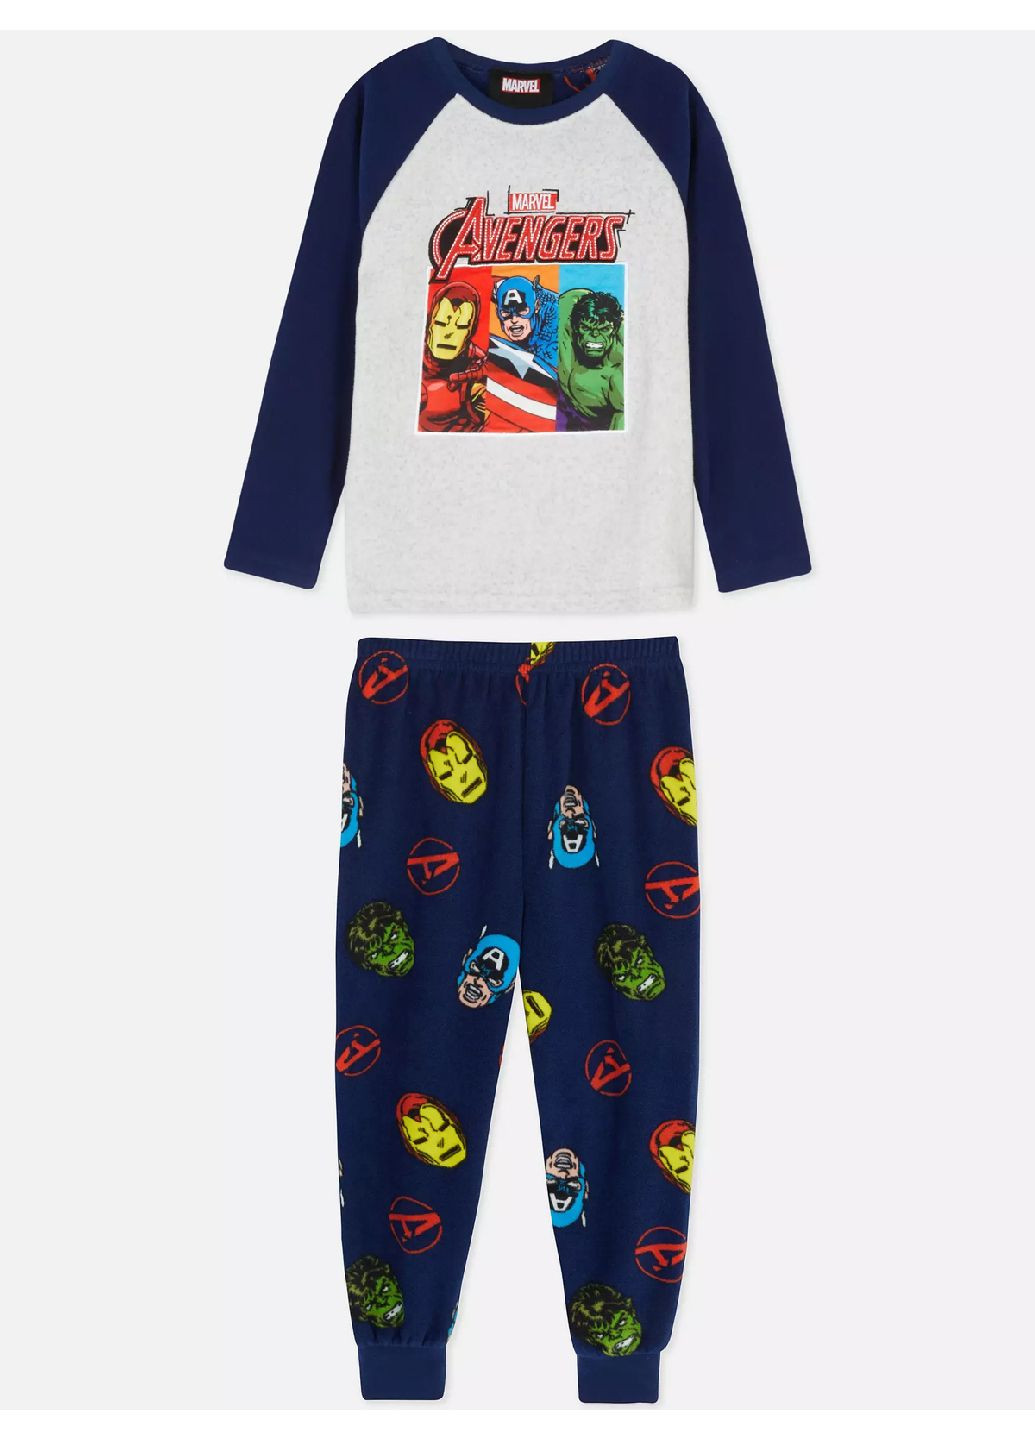 Комбинированная зимняя пижама (свитшот, брюки) свитшот + брюки Primark